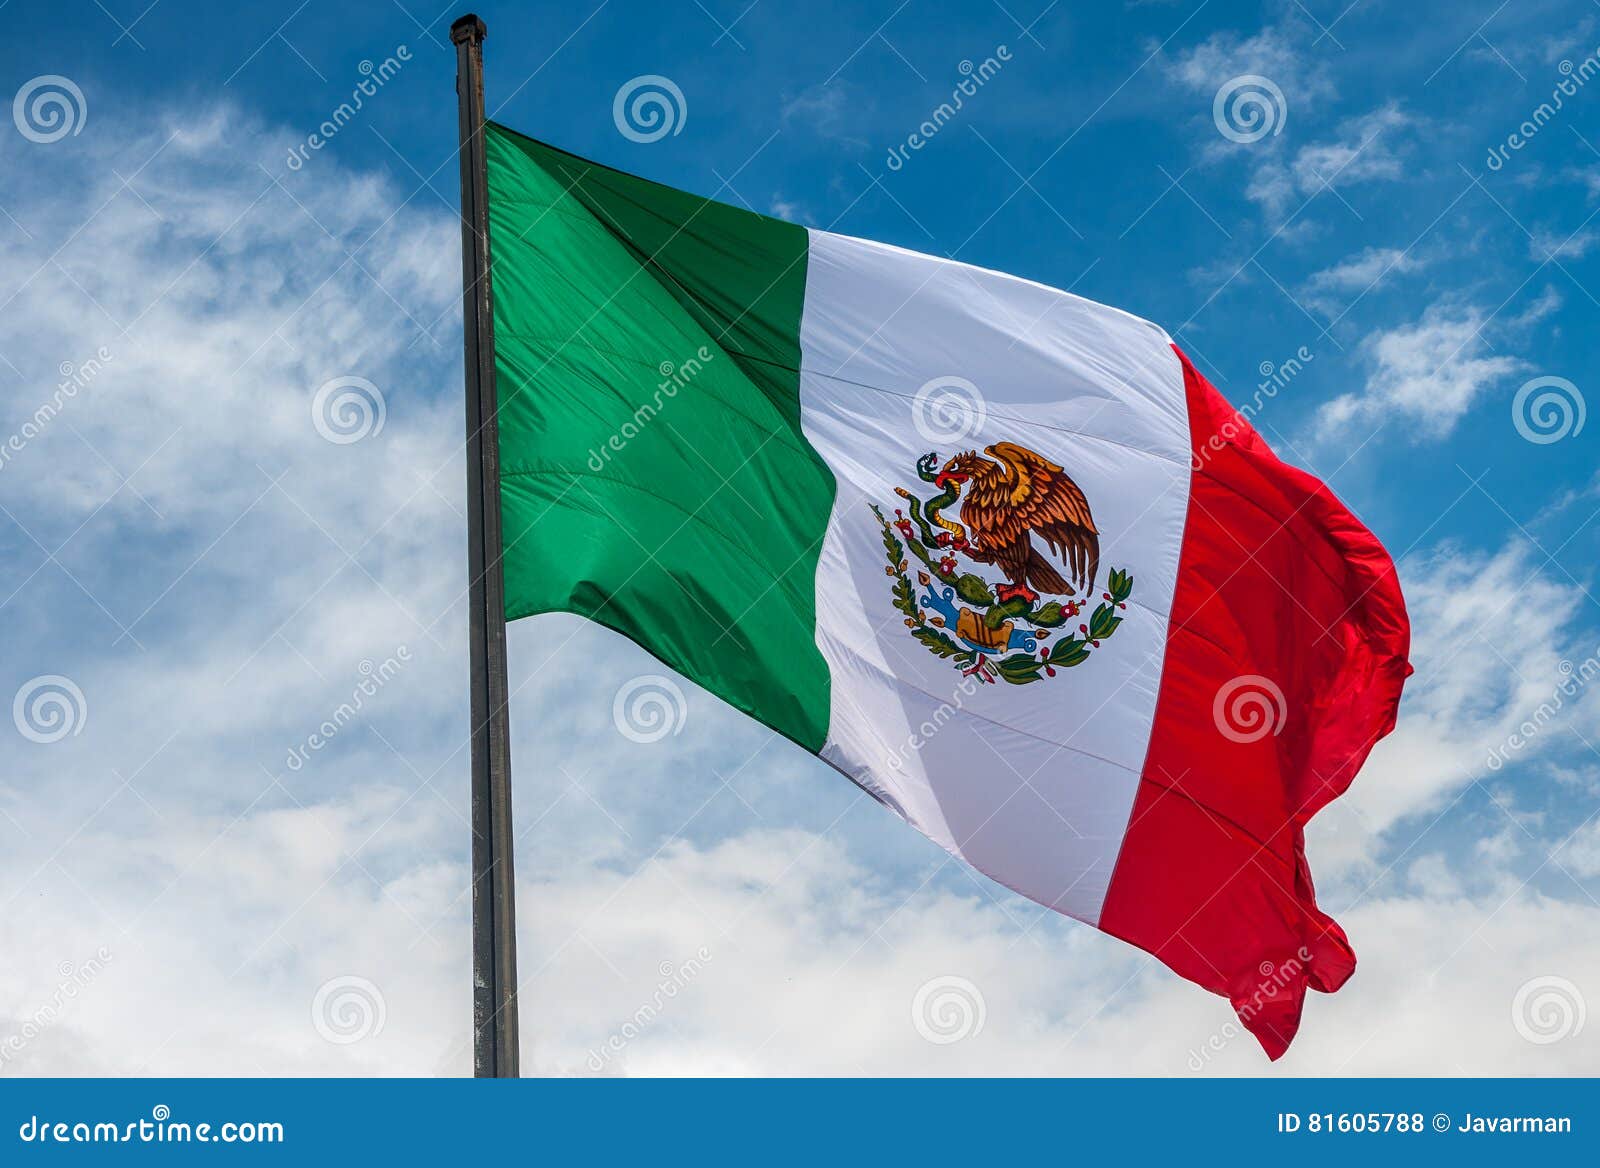 flag of mexico over blue cloudy sky